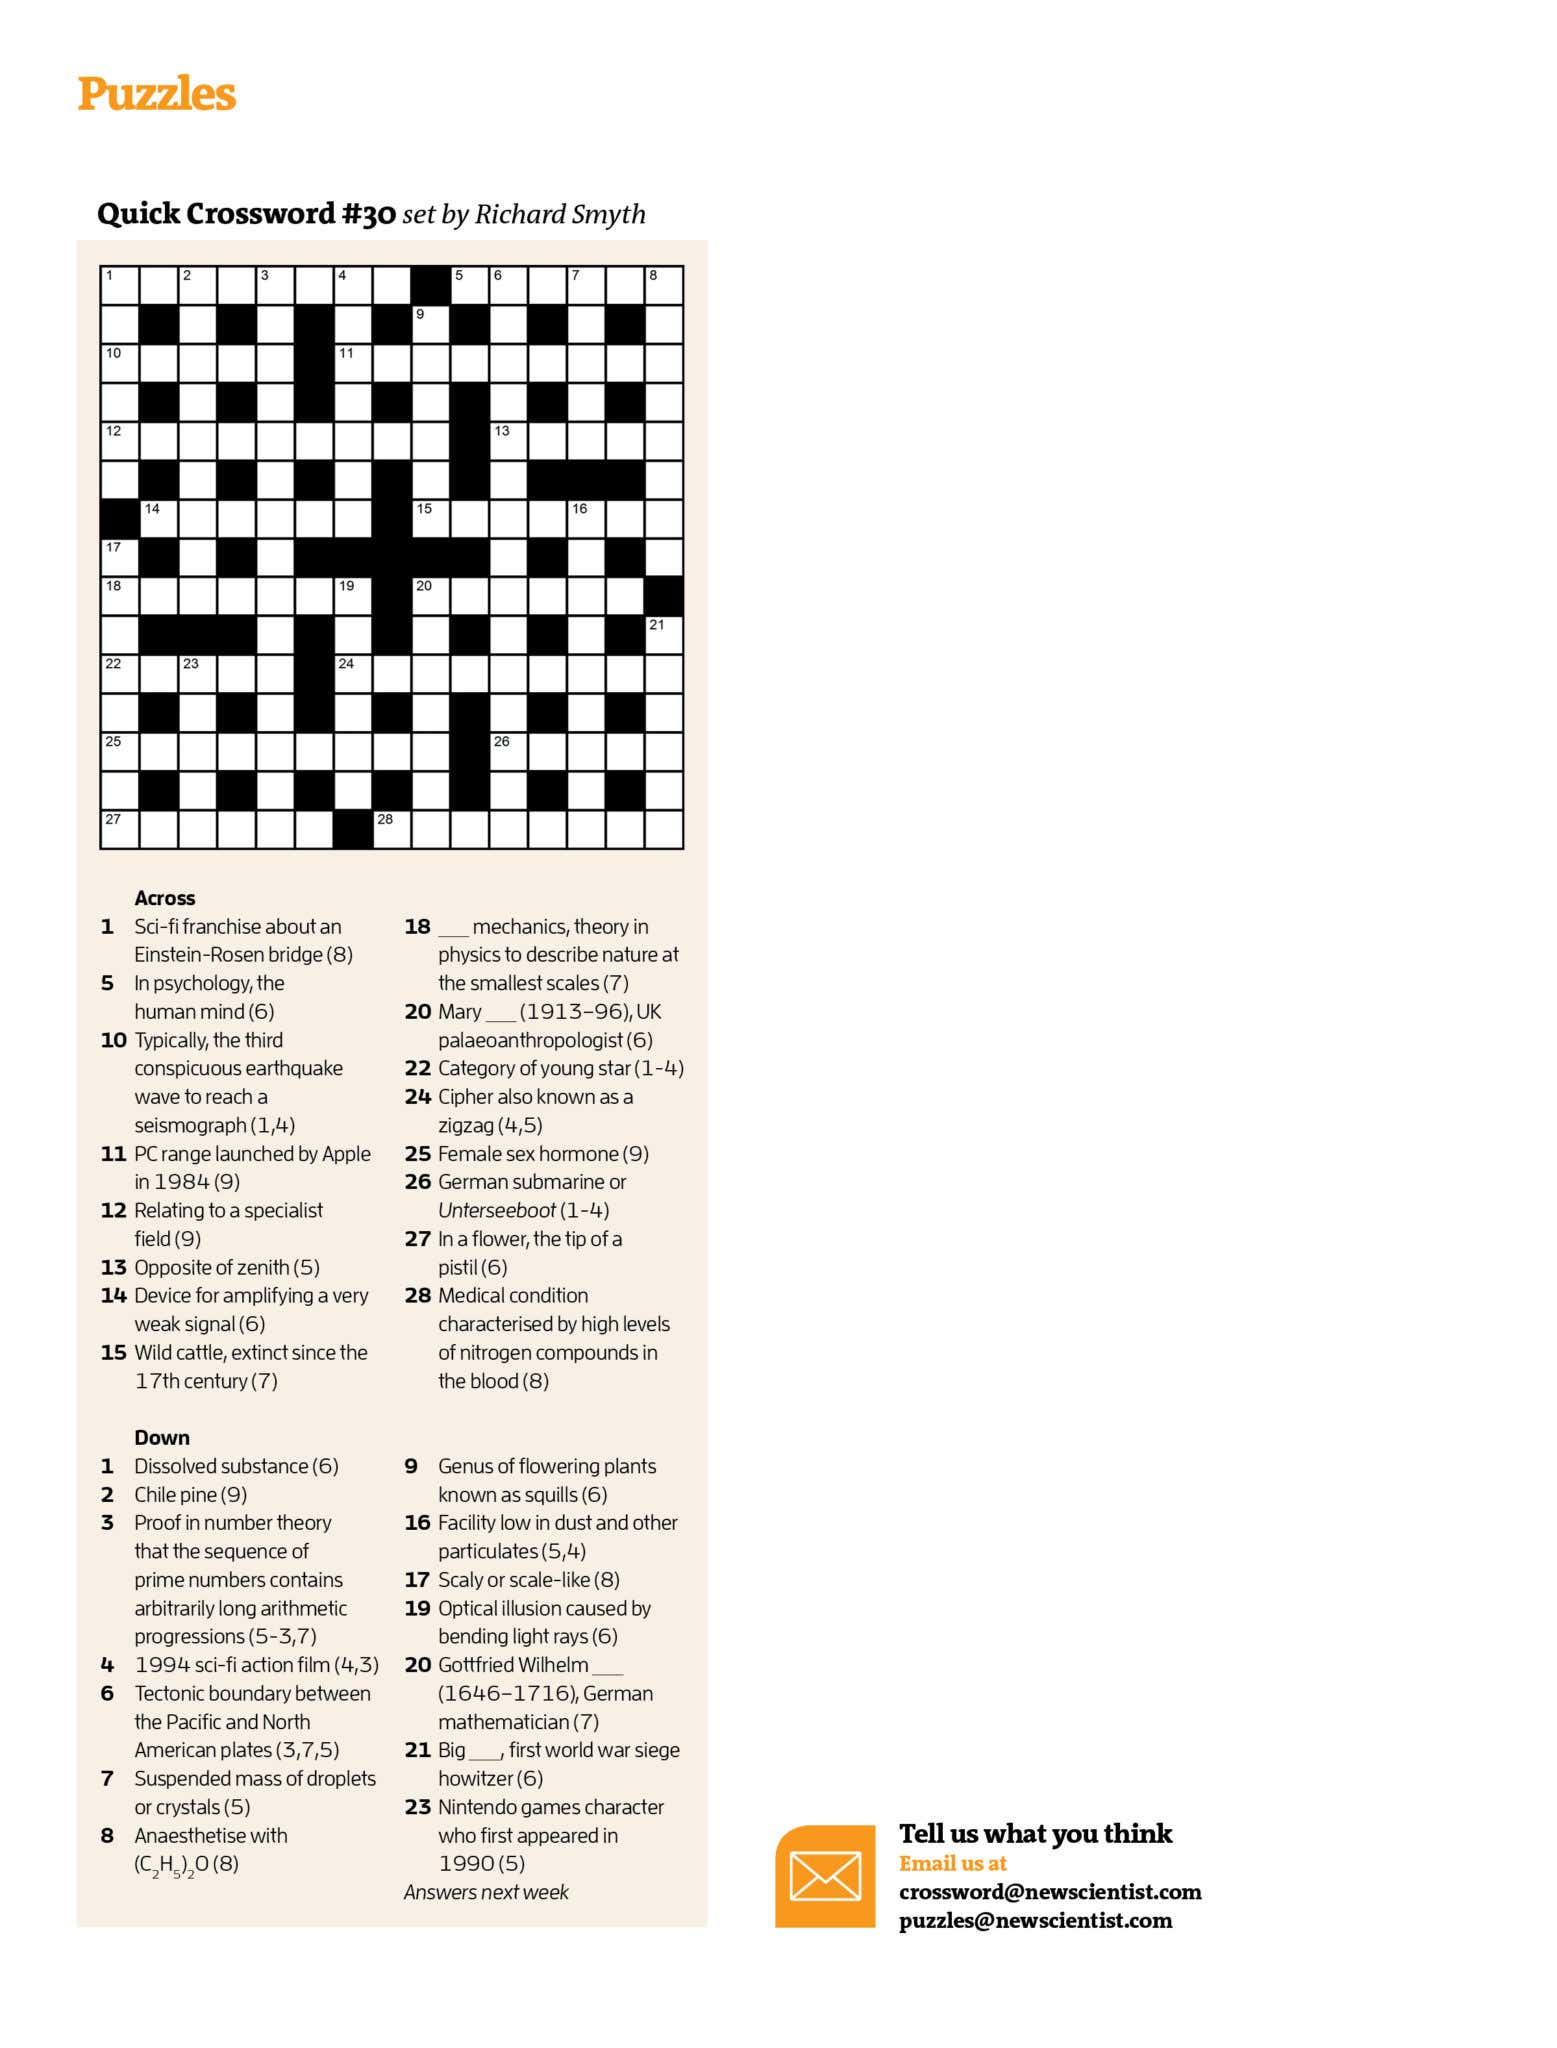 Quick Crossword #30 | New Scientist - Daily Quick Crossword Printable Version